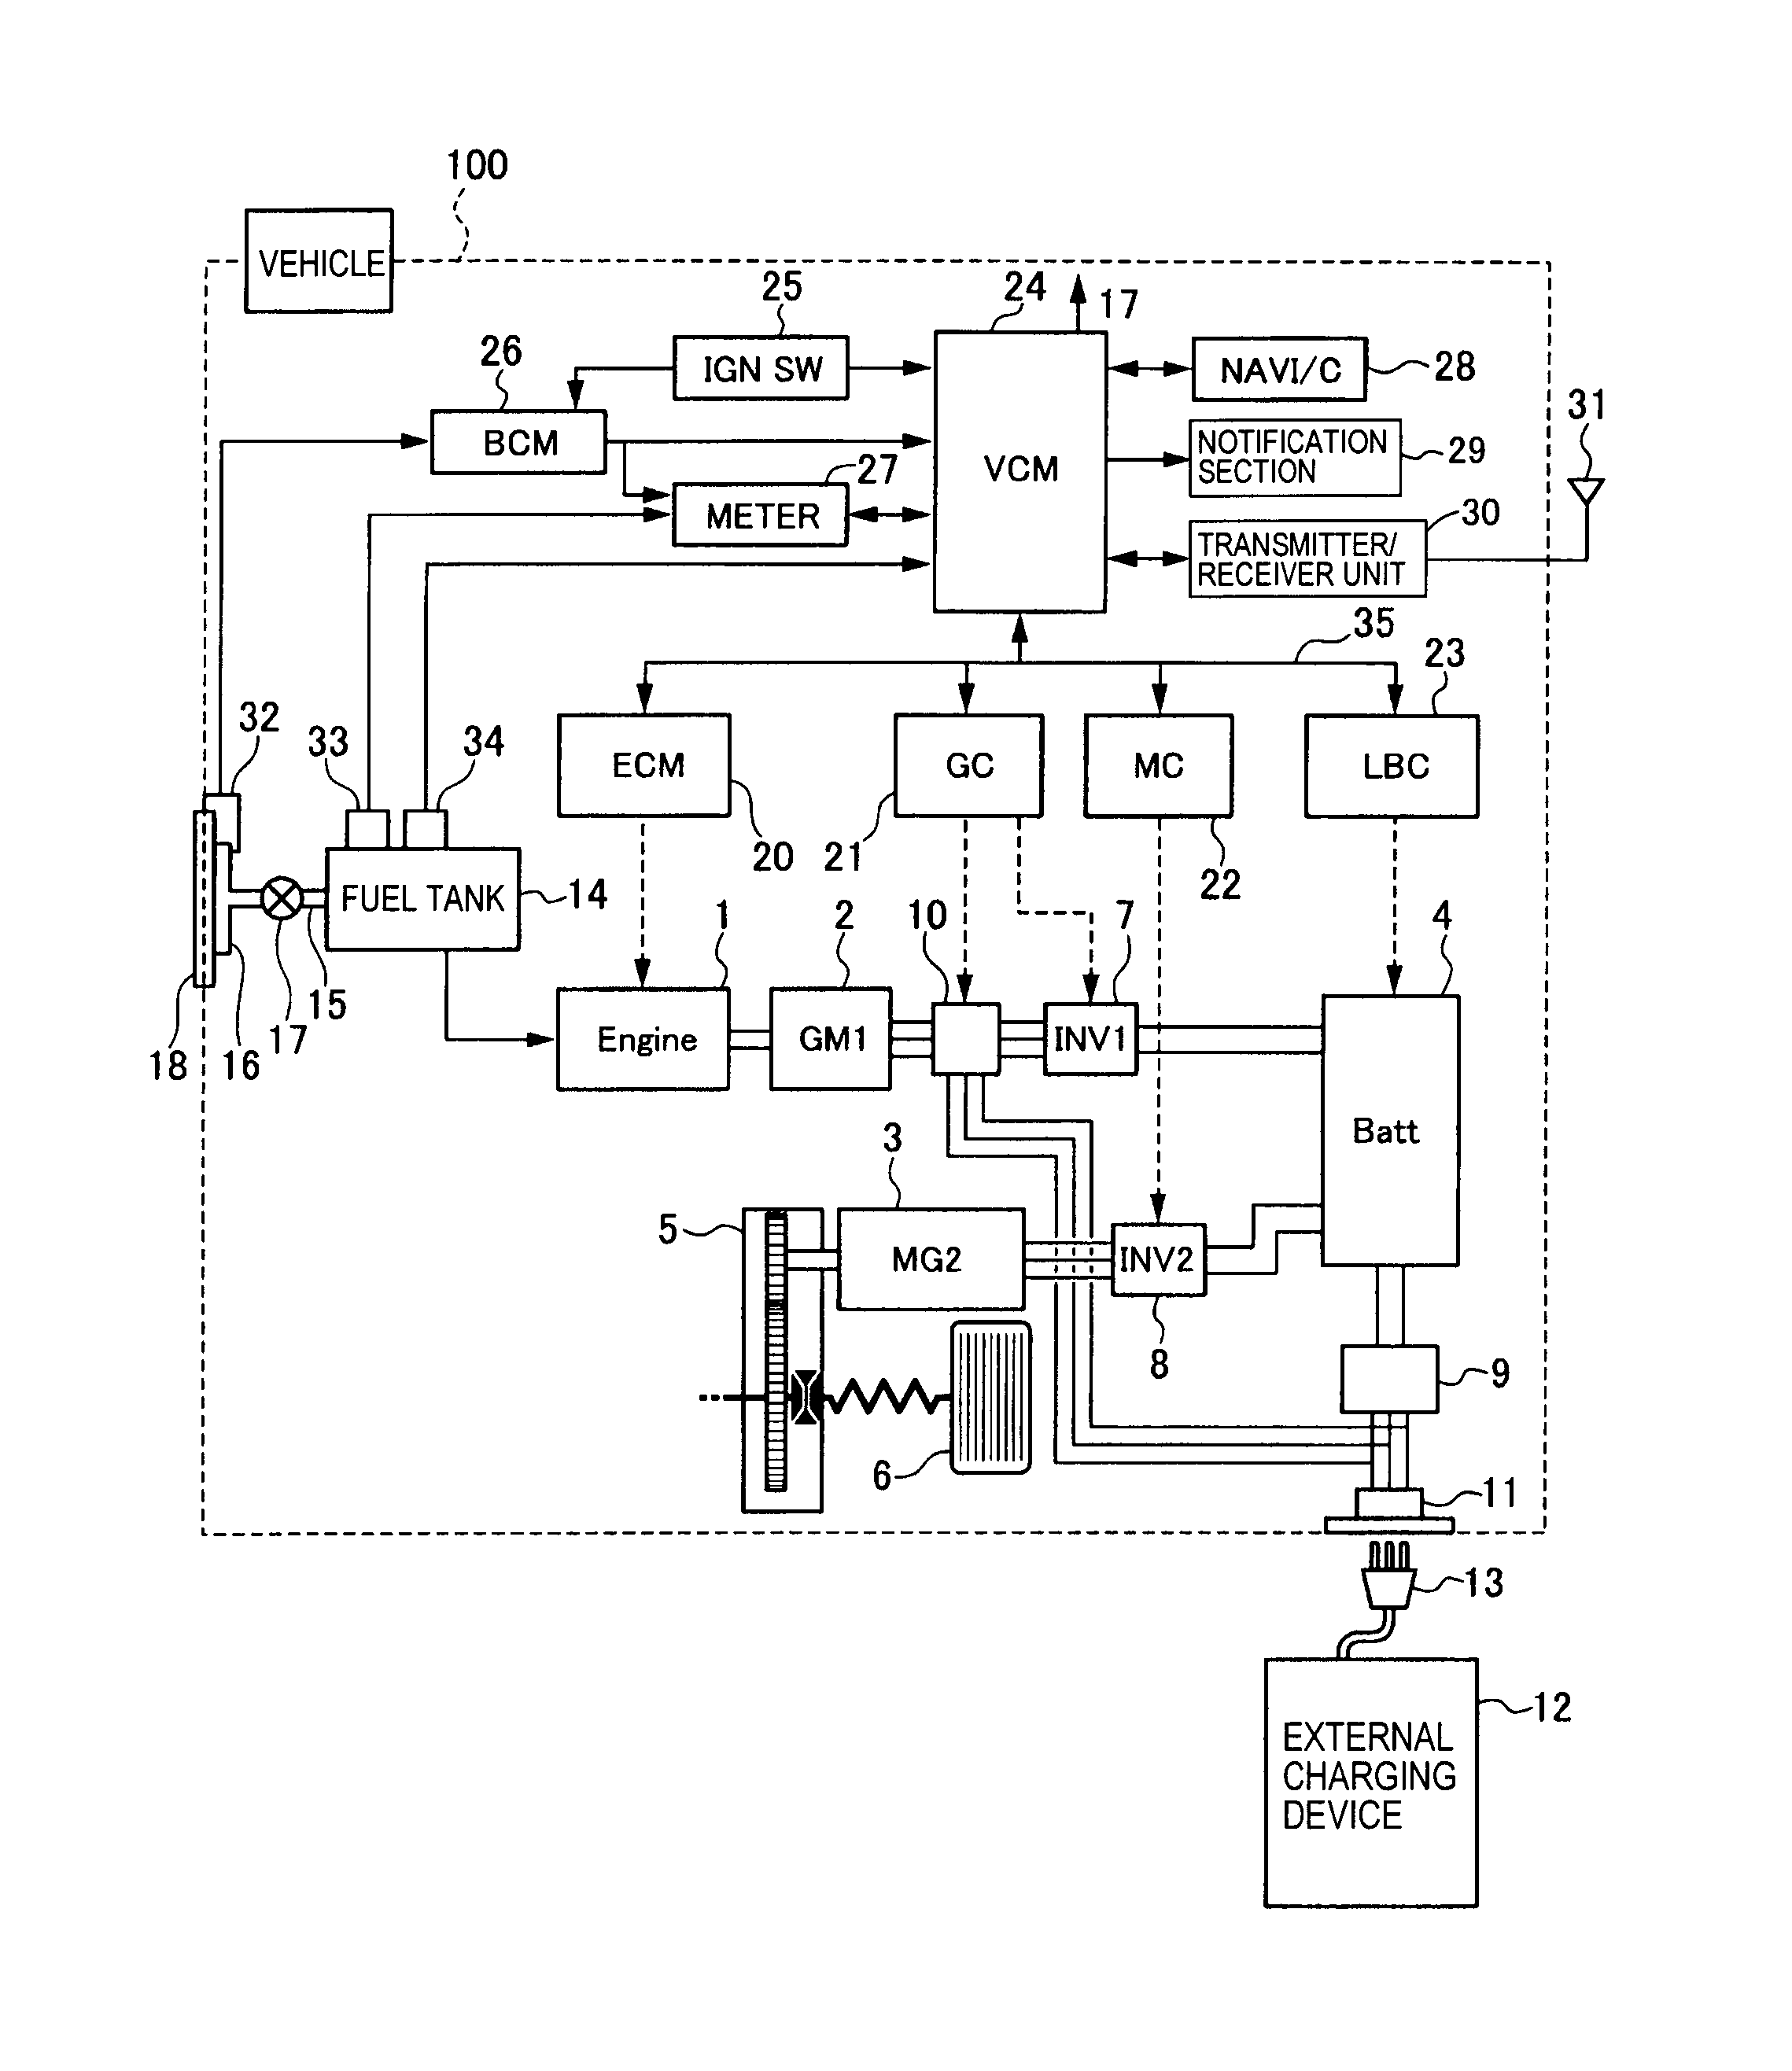 1f95-1277 wiring diagram